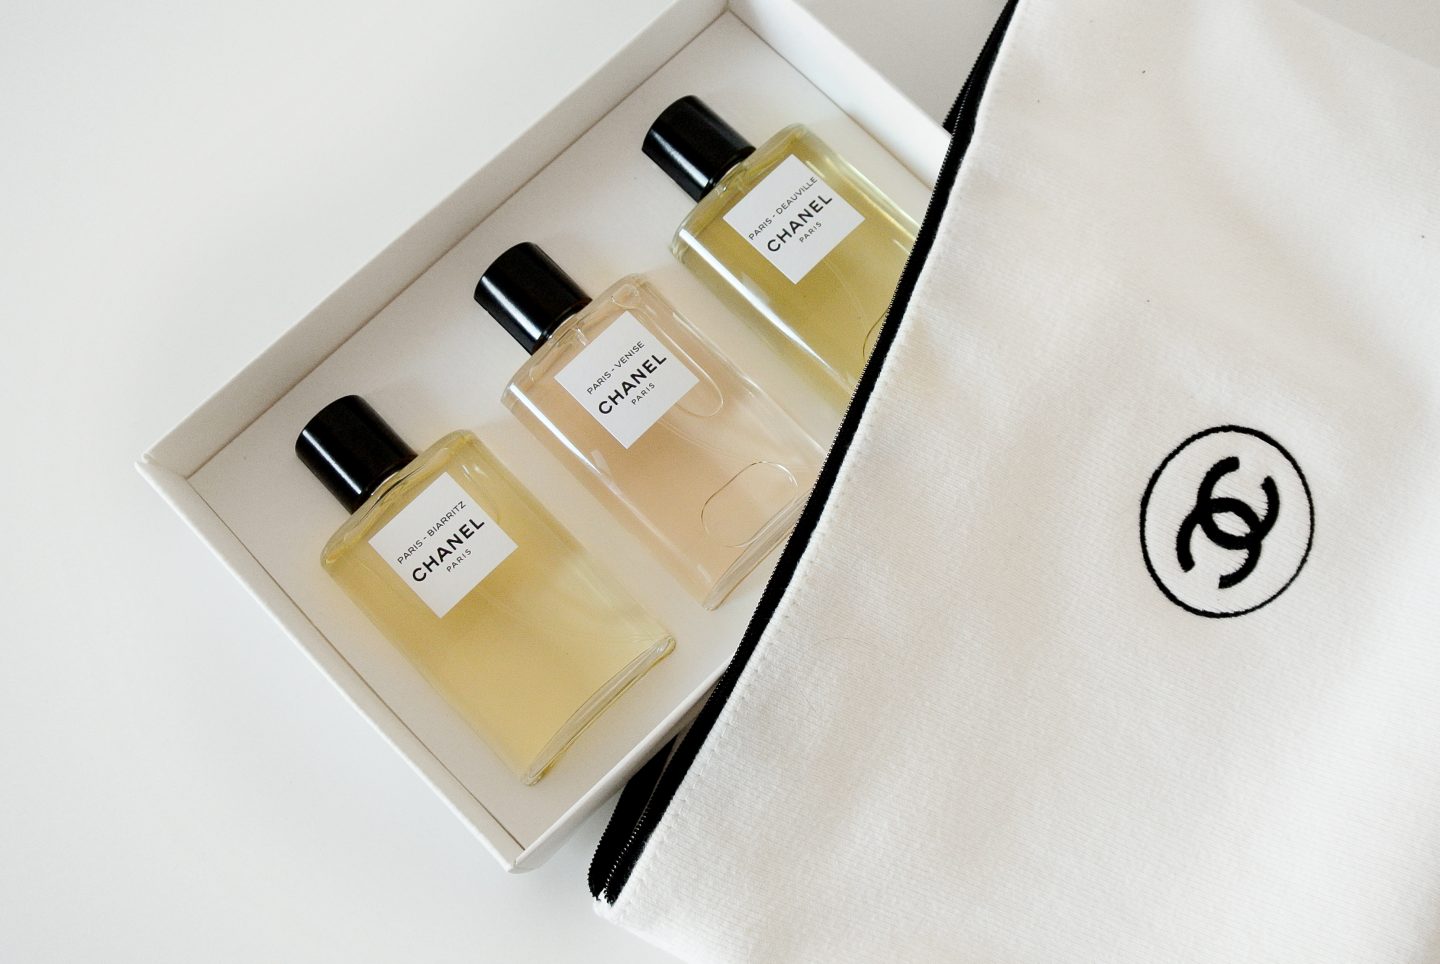 Les Eaux de Chanel: a new olfactory journey beginning in Deauville